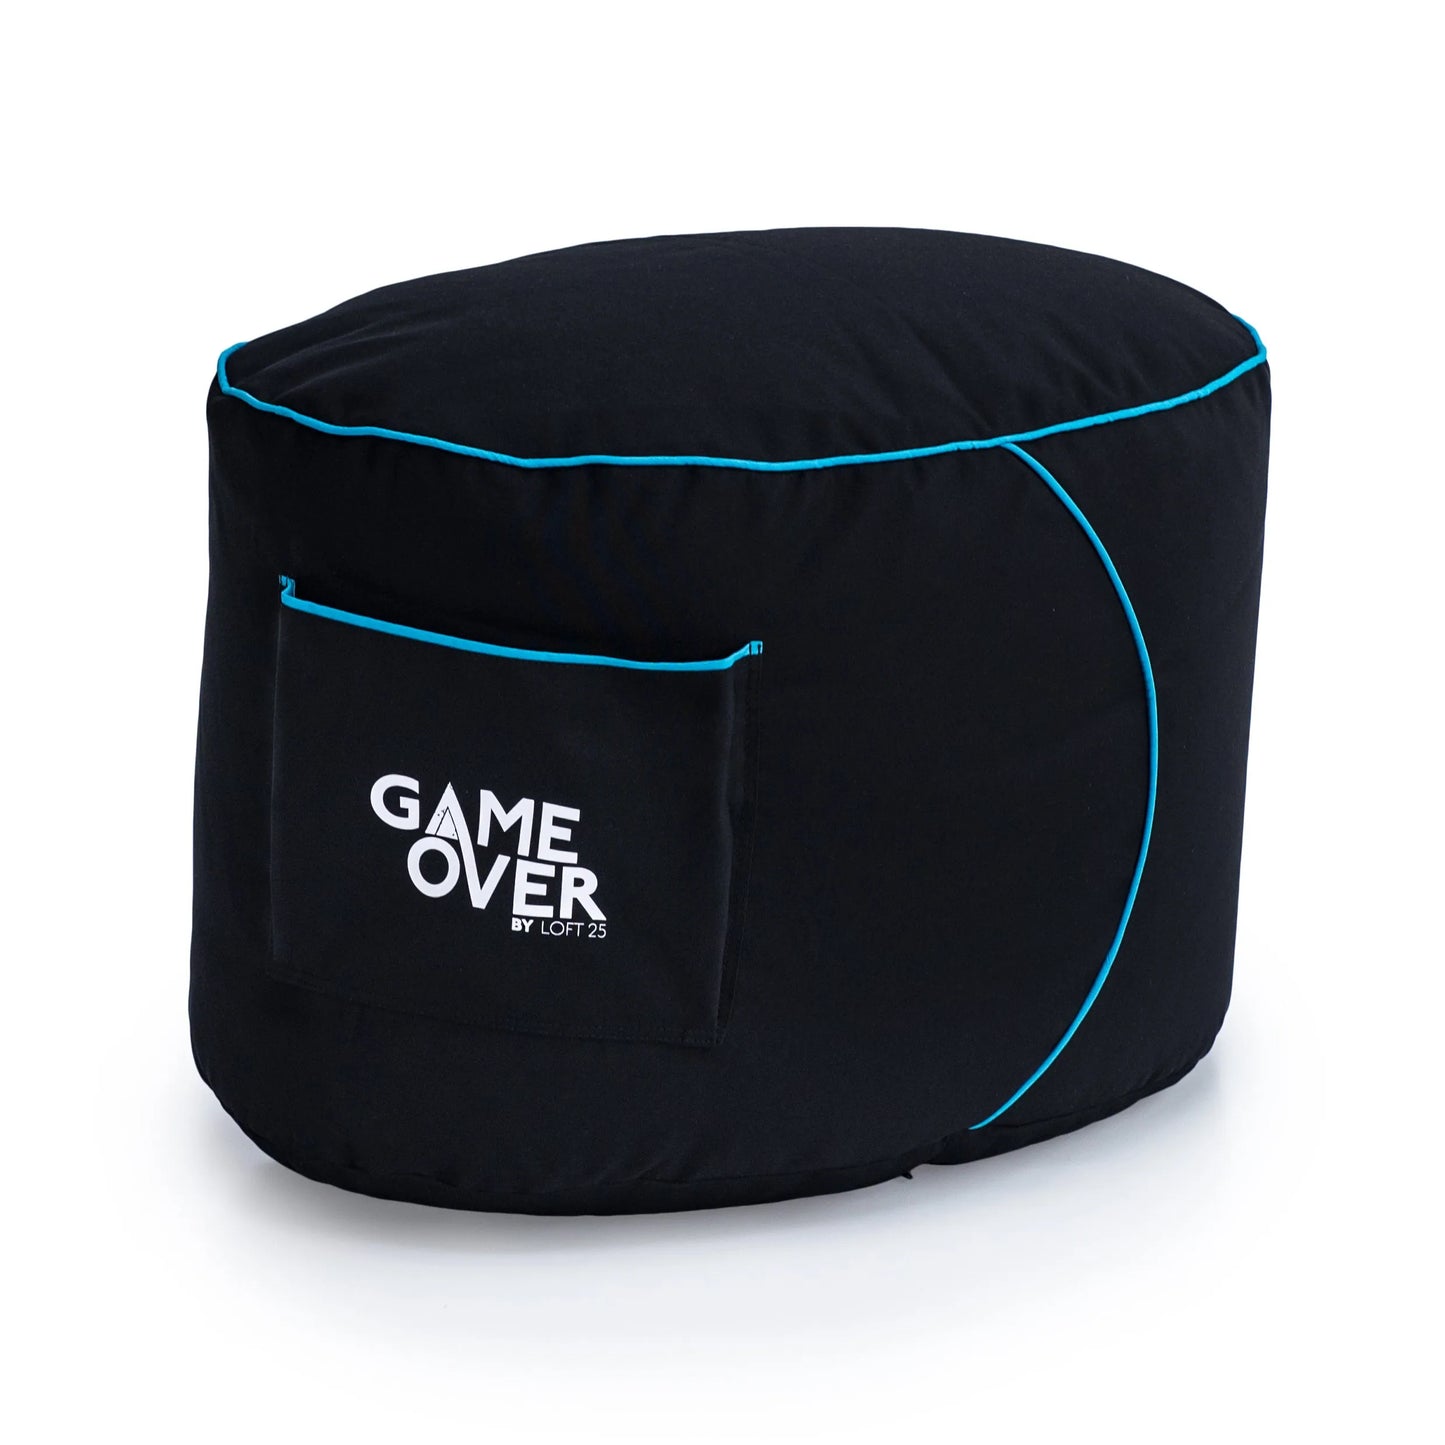 Comfortable and stylish bean bag ottoman for gamers